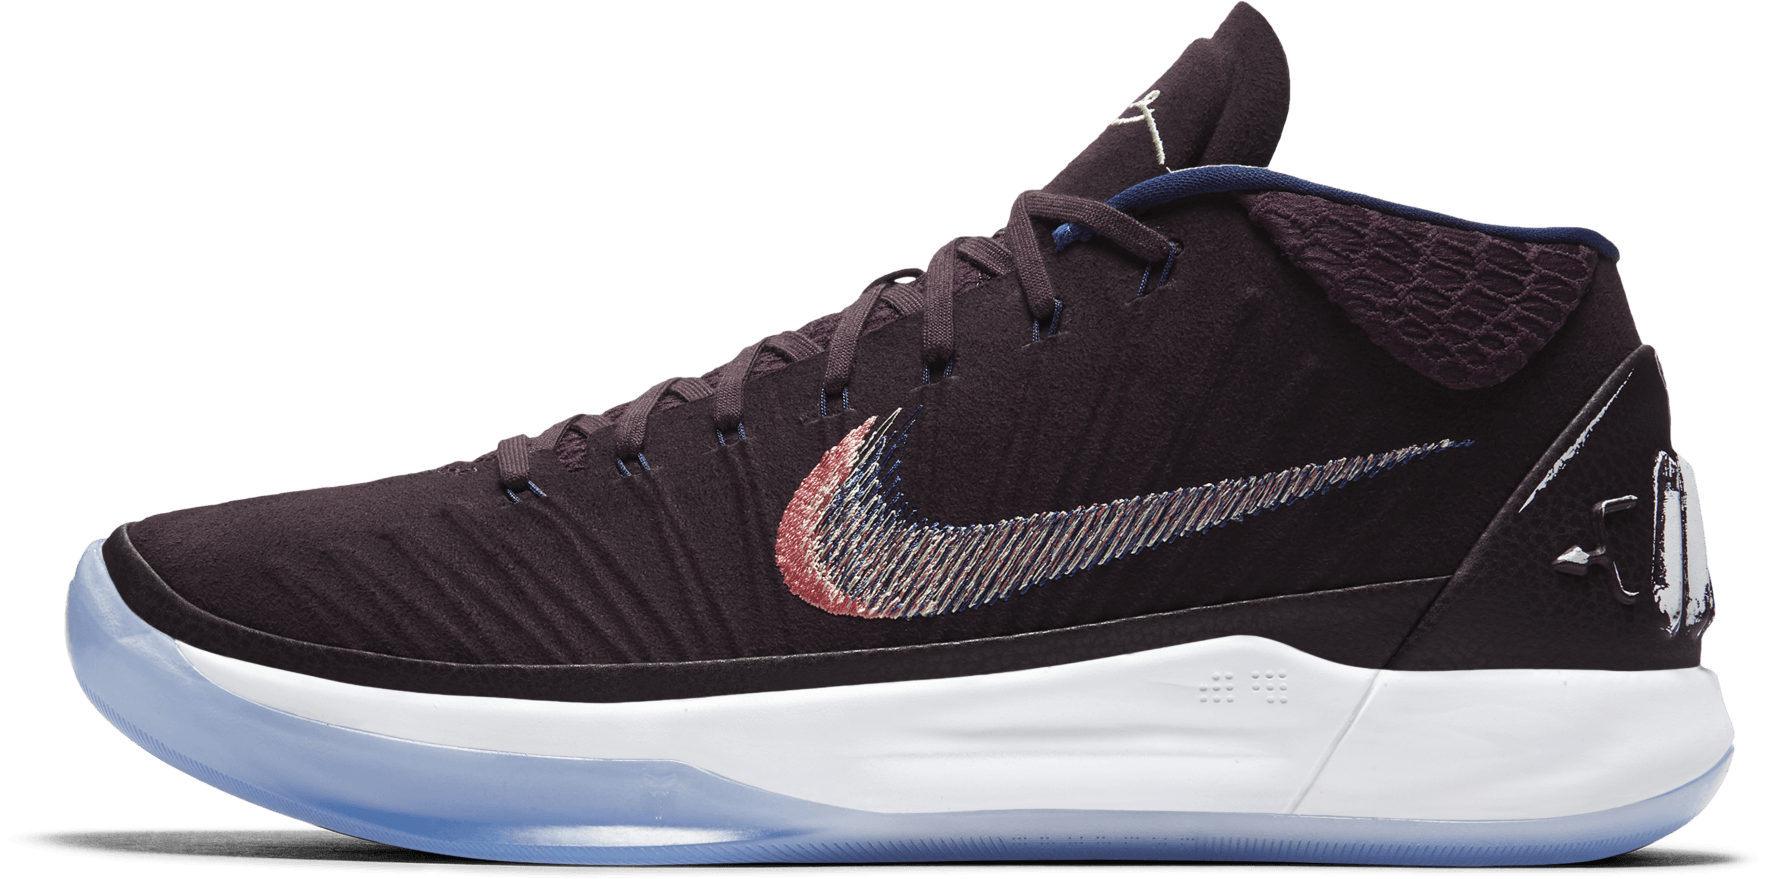 Nike Kobe AD Mid Colorways - 14 Styles